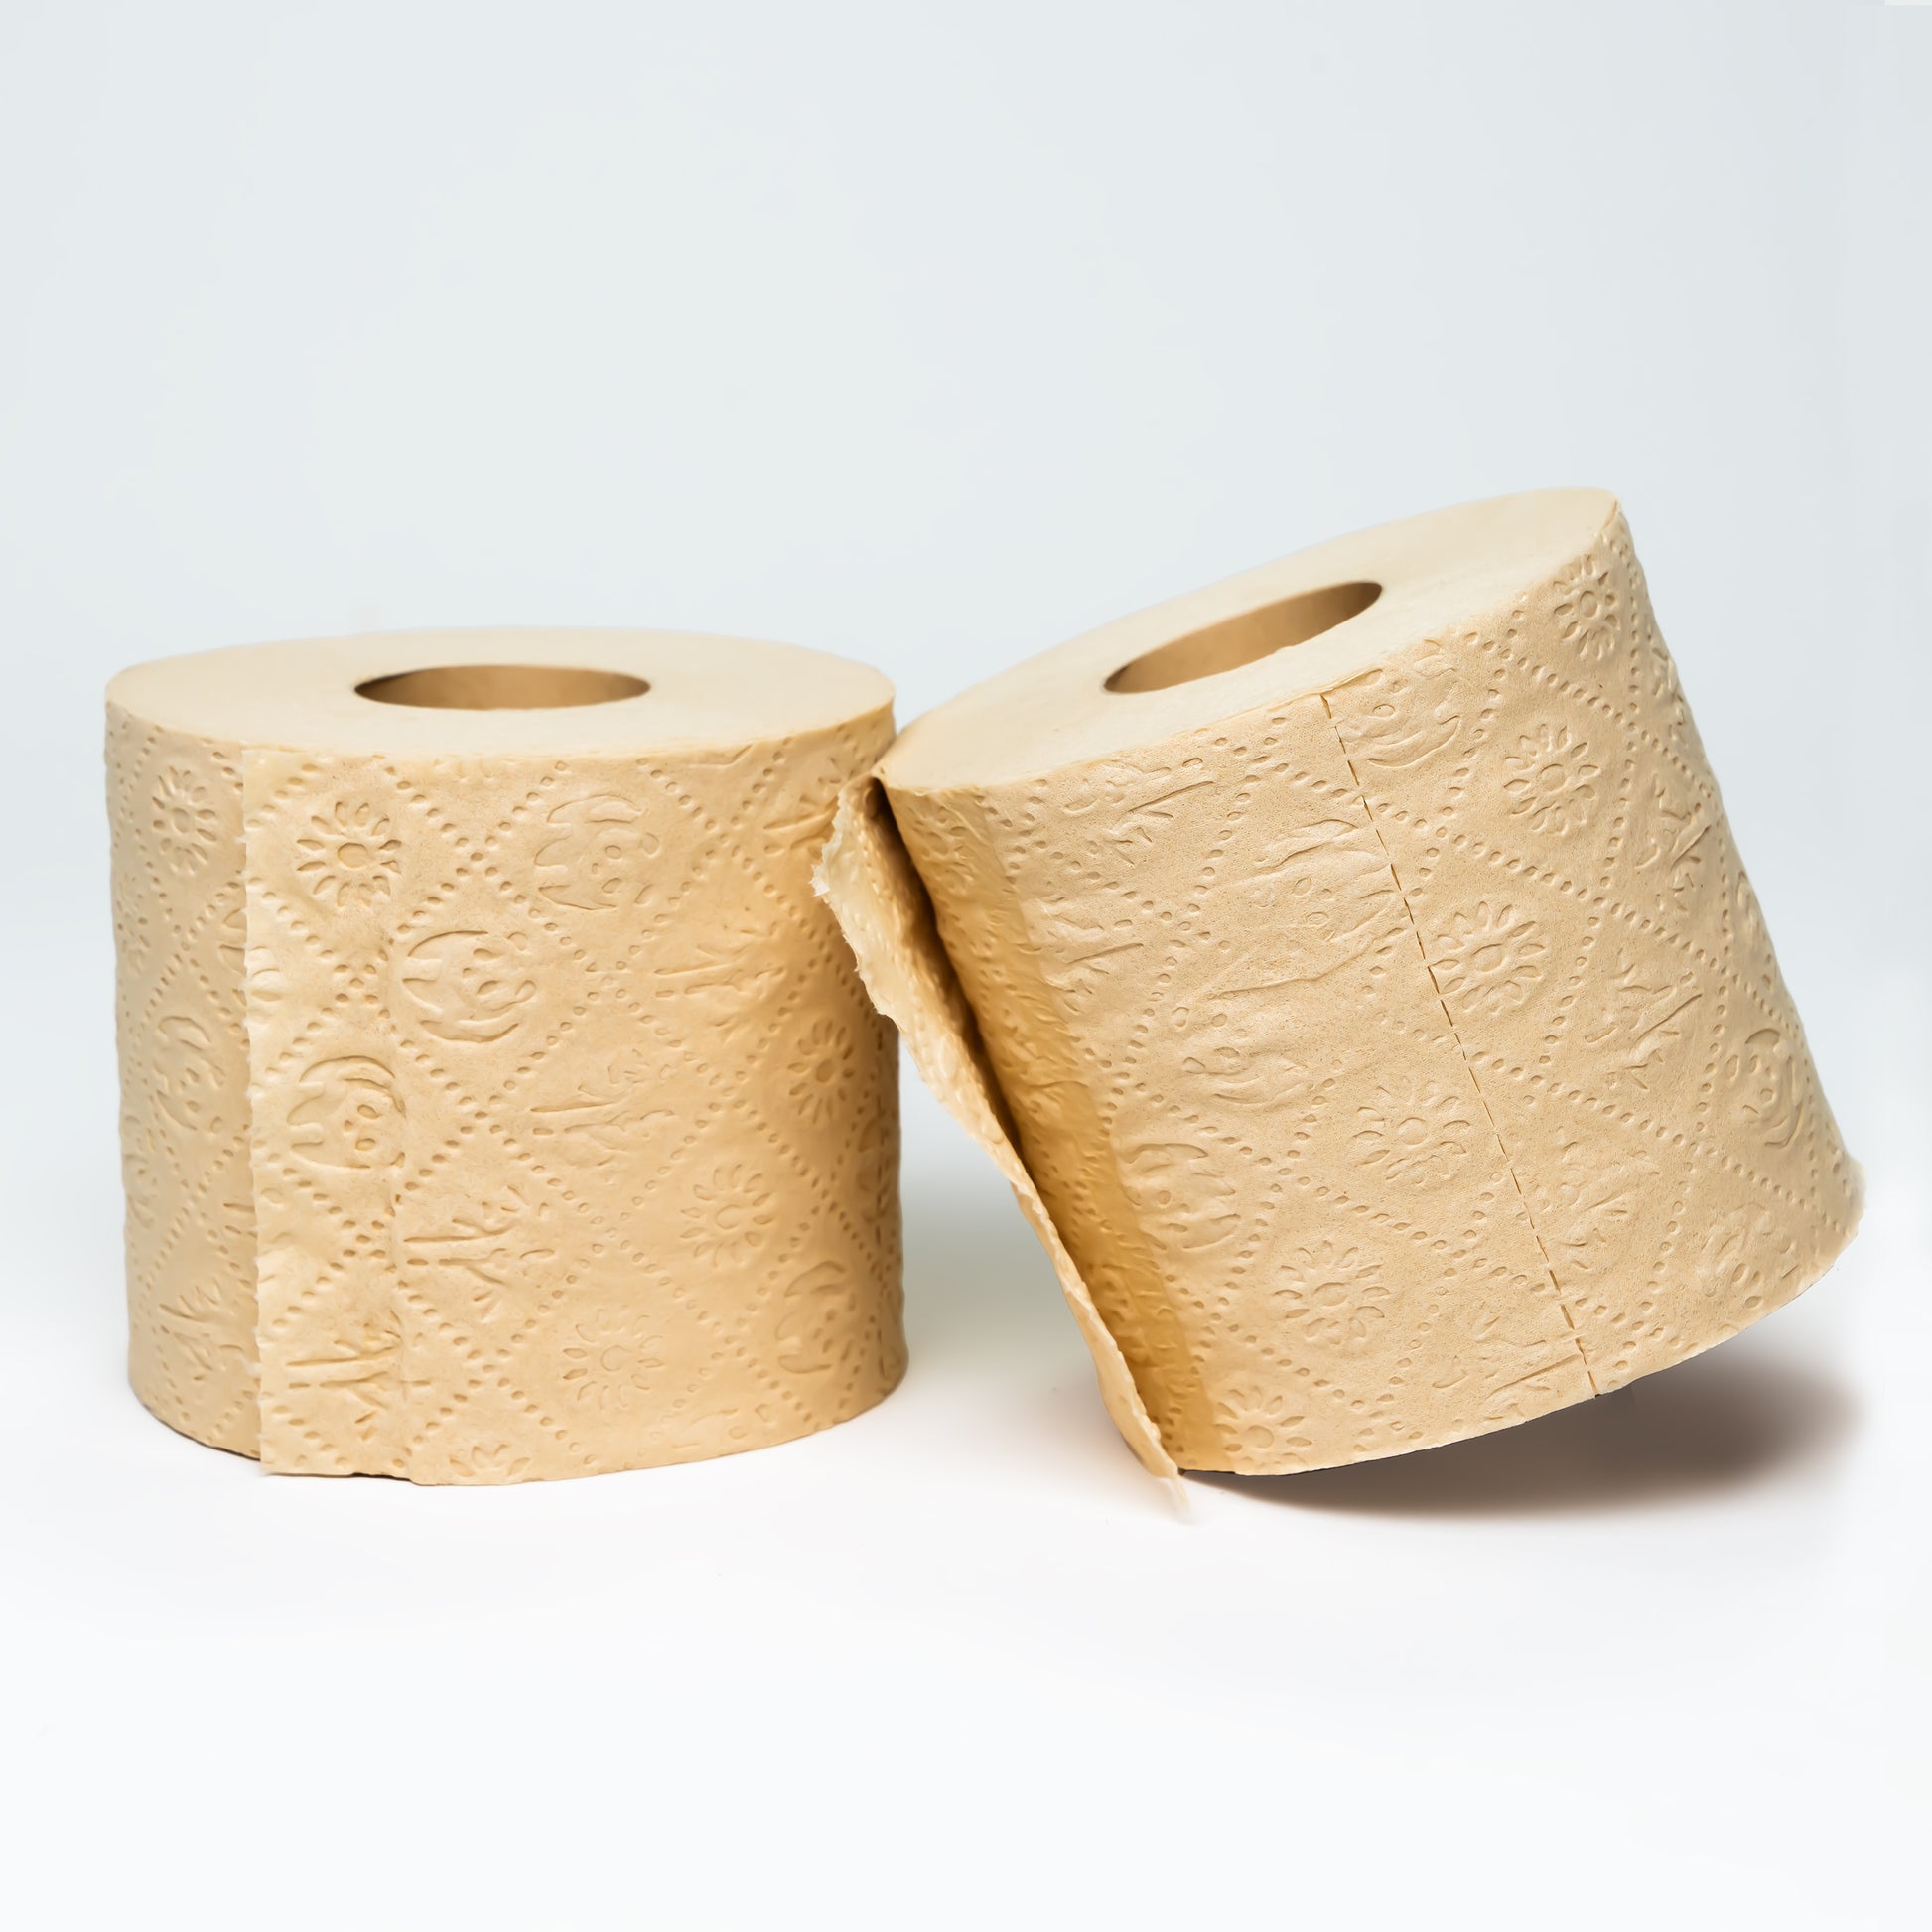 Tissue Paper suppliers in Finland, manufacturers of Tissue Paper for sale  in Finland